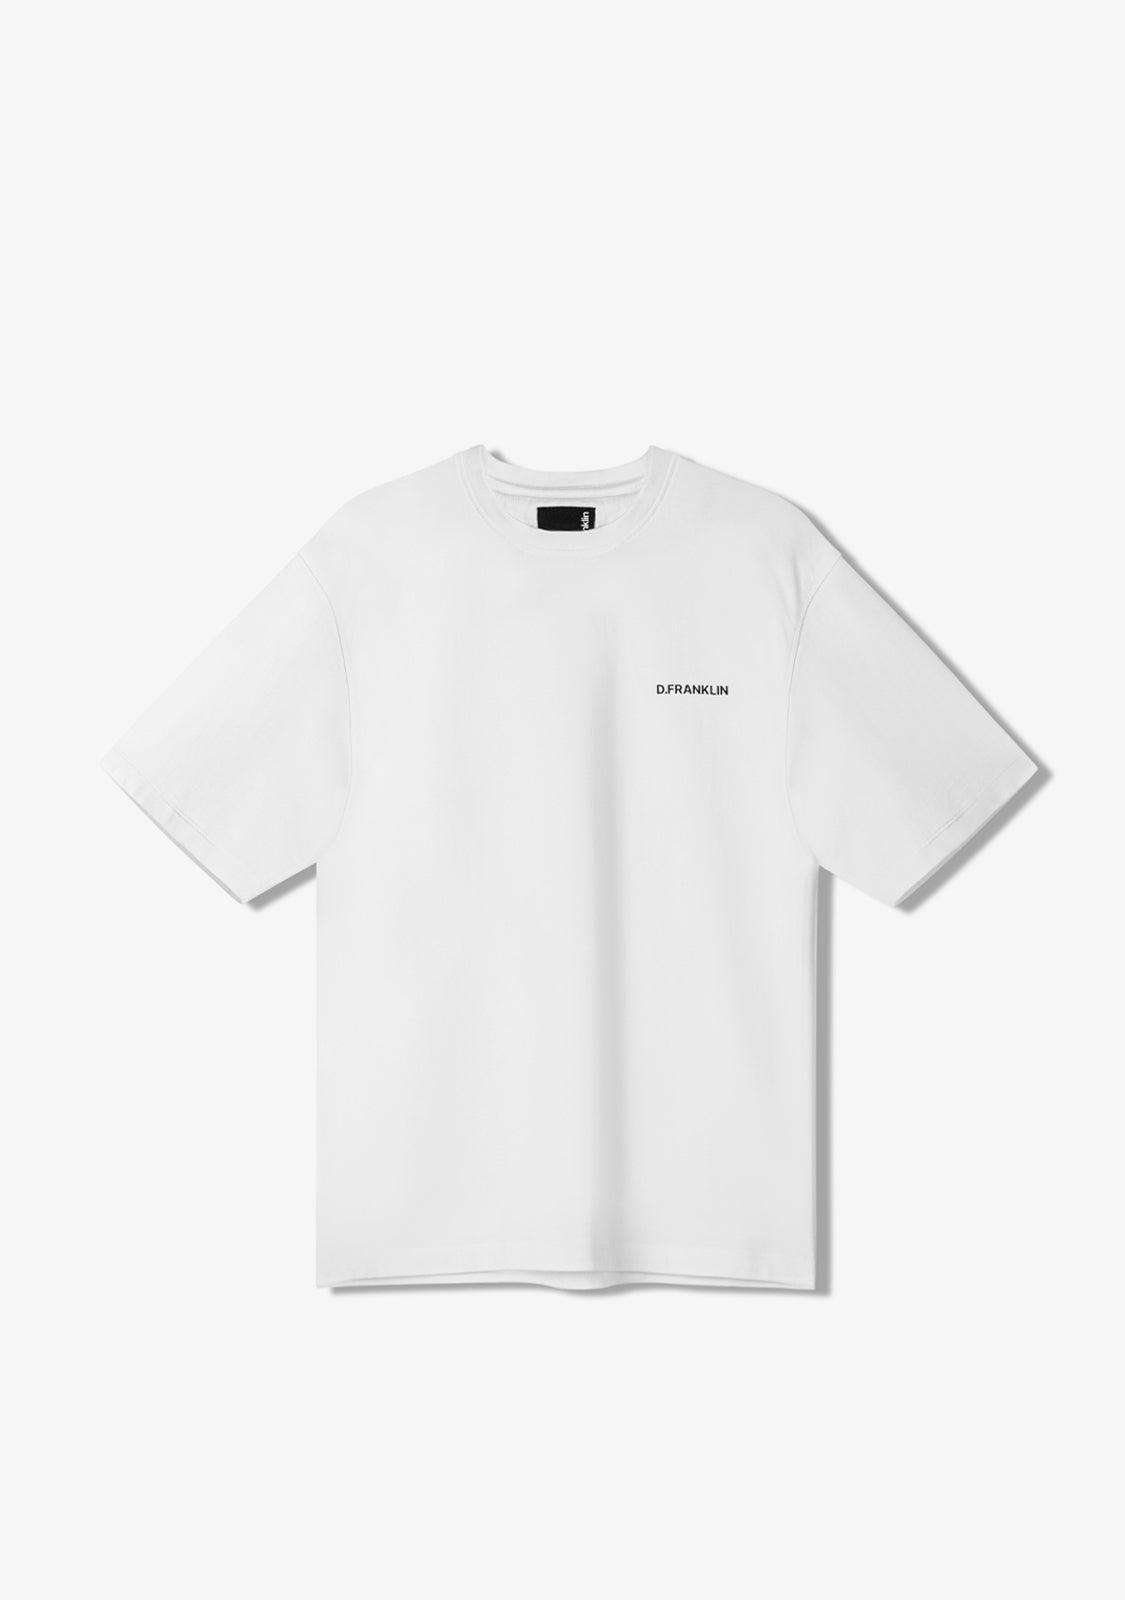 Image of Sunsets T-Shirt White / Black